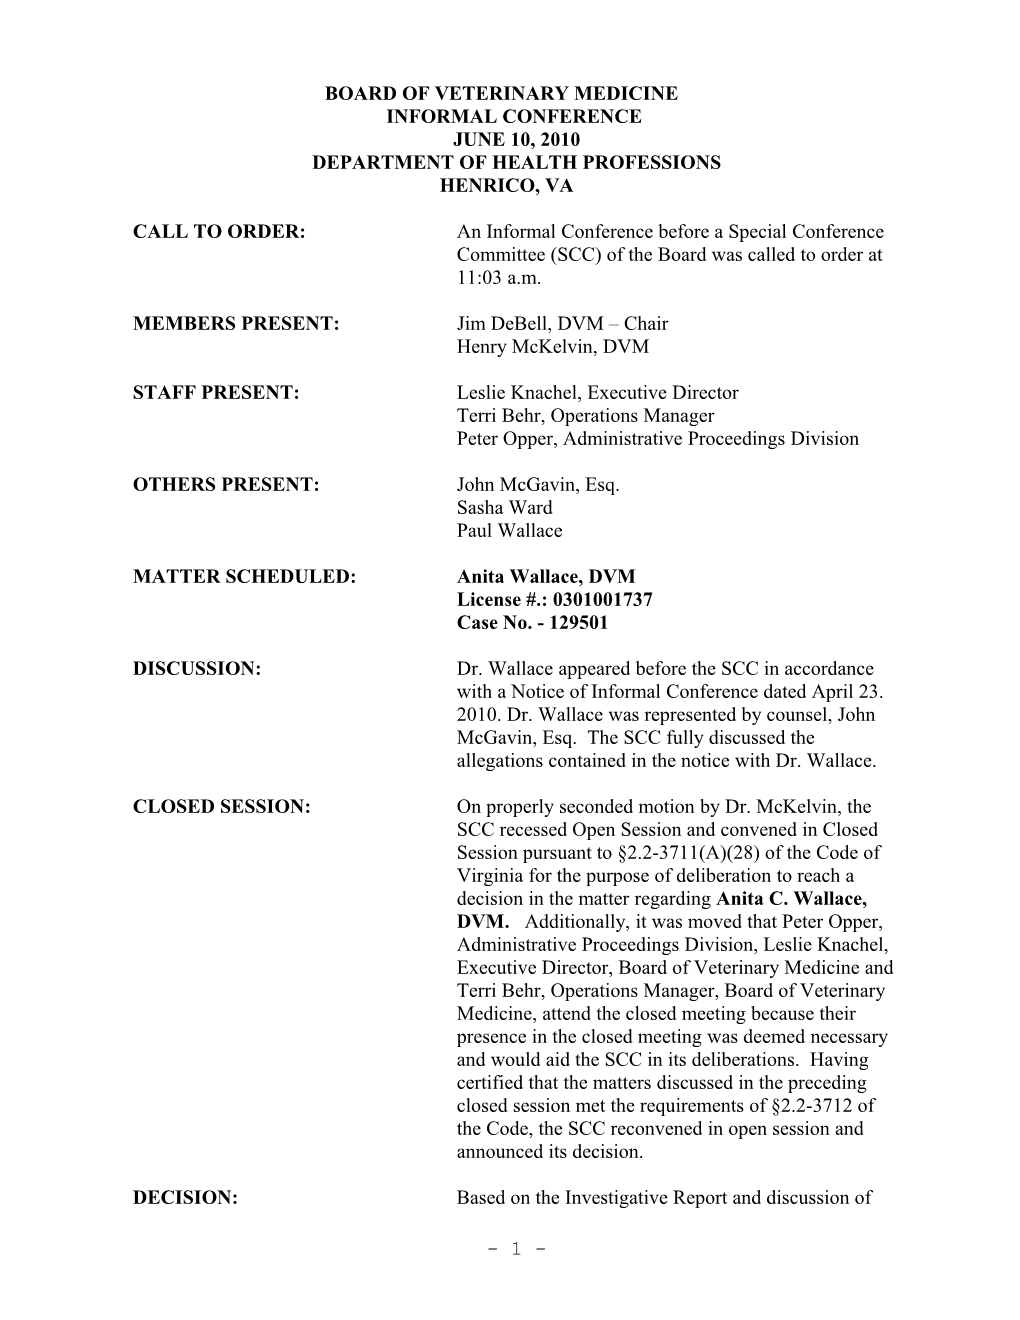 BOARD of VETERINARY MEDICINE Minutes 6-10-2010